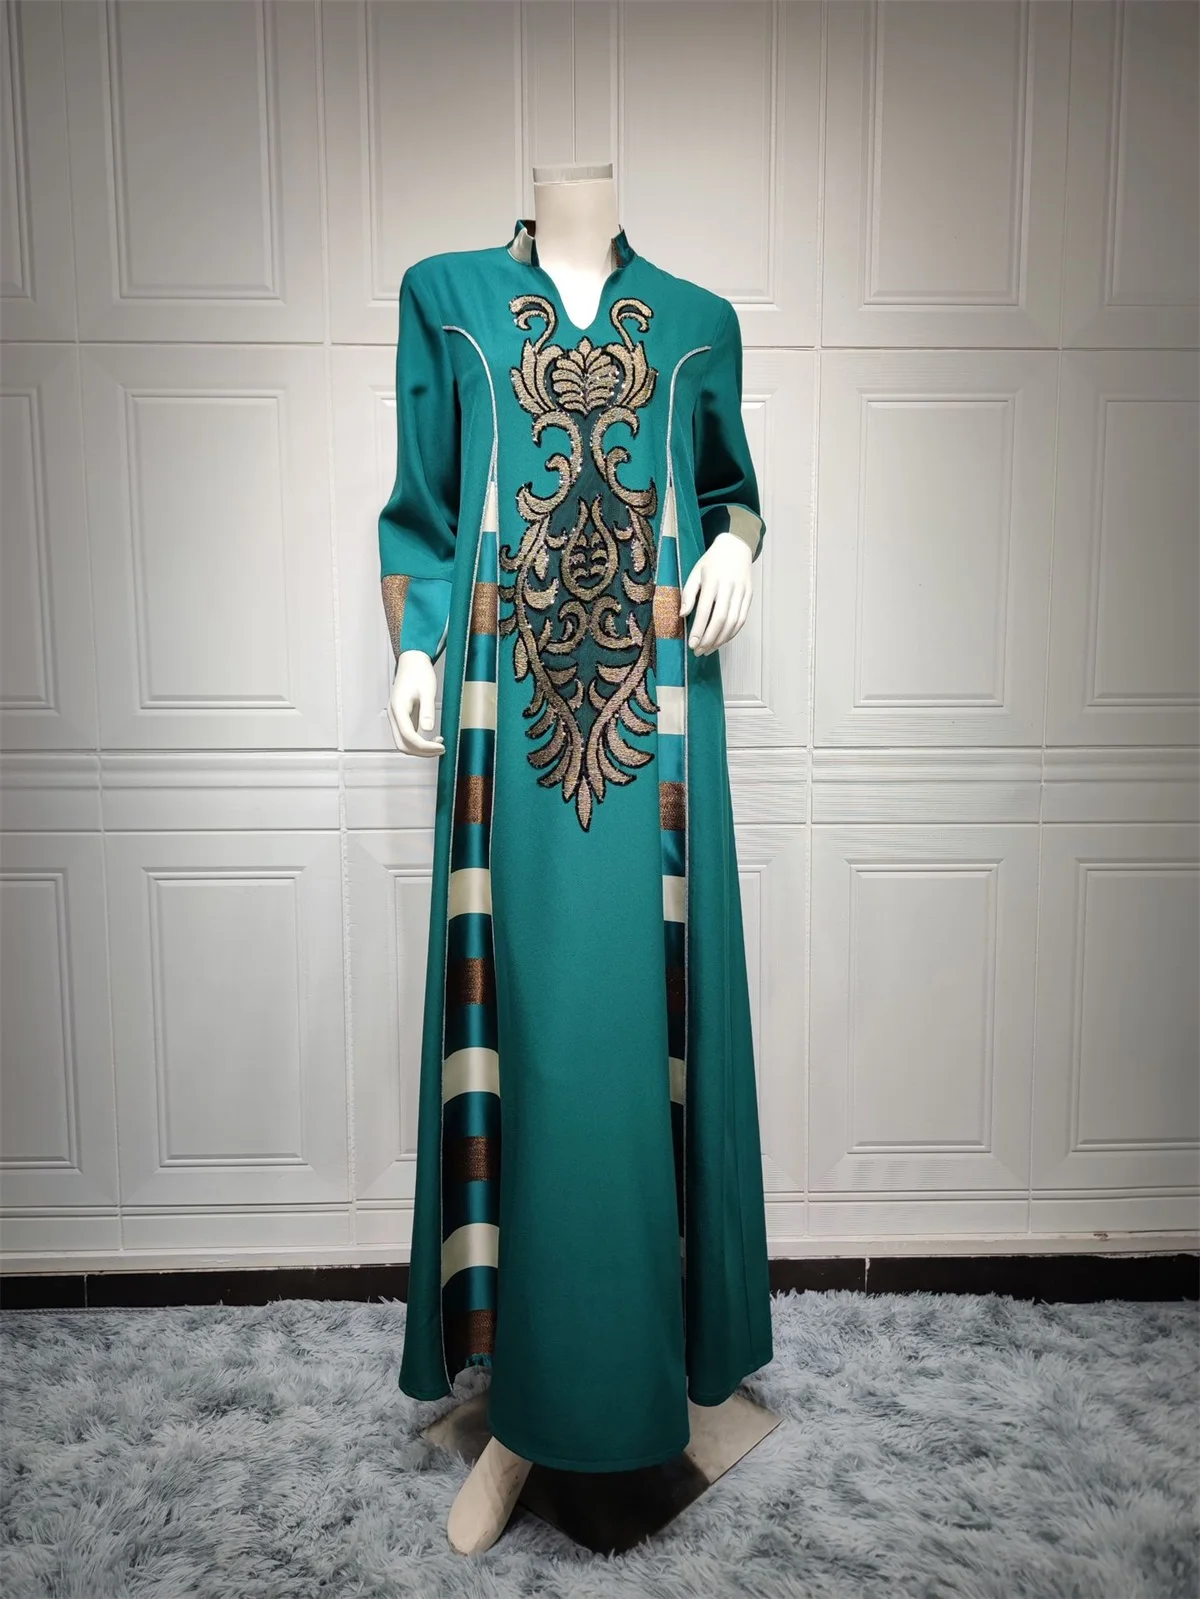 Moroccan Caftan Woman Retro Sequins Embroidery Contrast Color Party Dresses Islam Turkey Robe Saudi Black Abayas